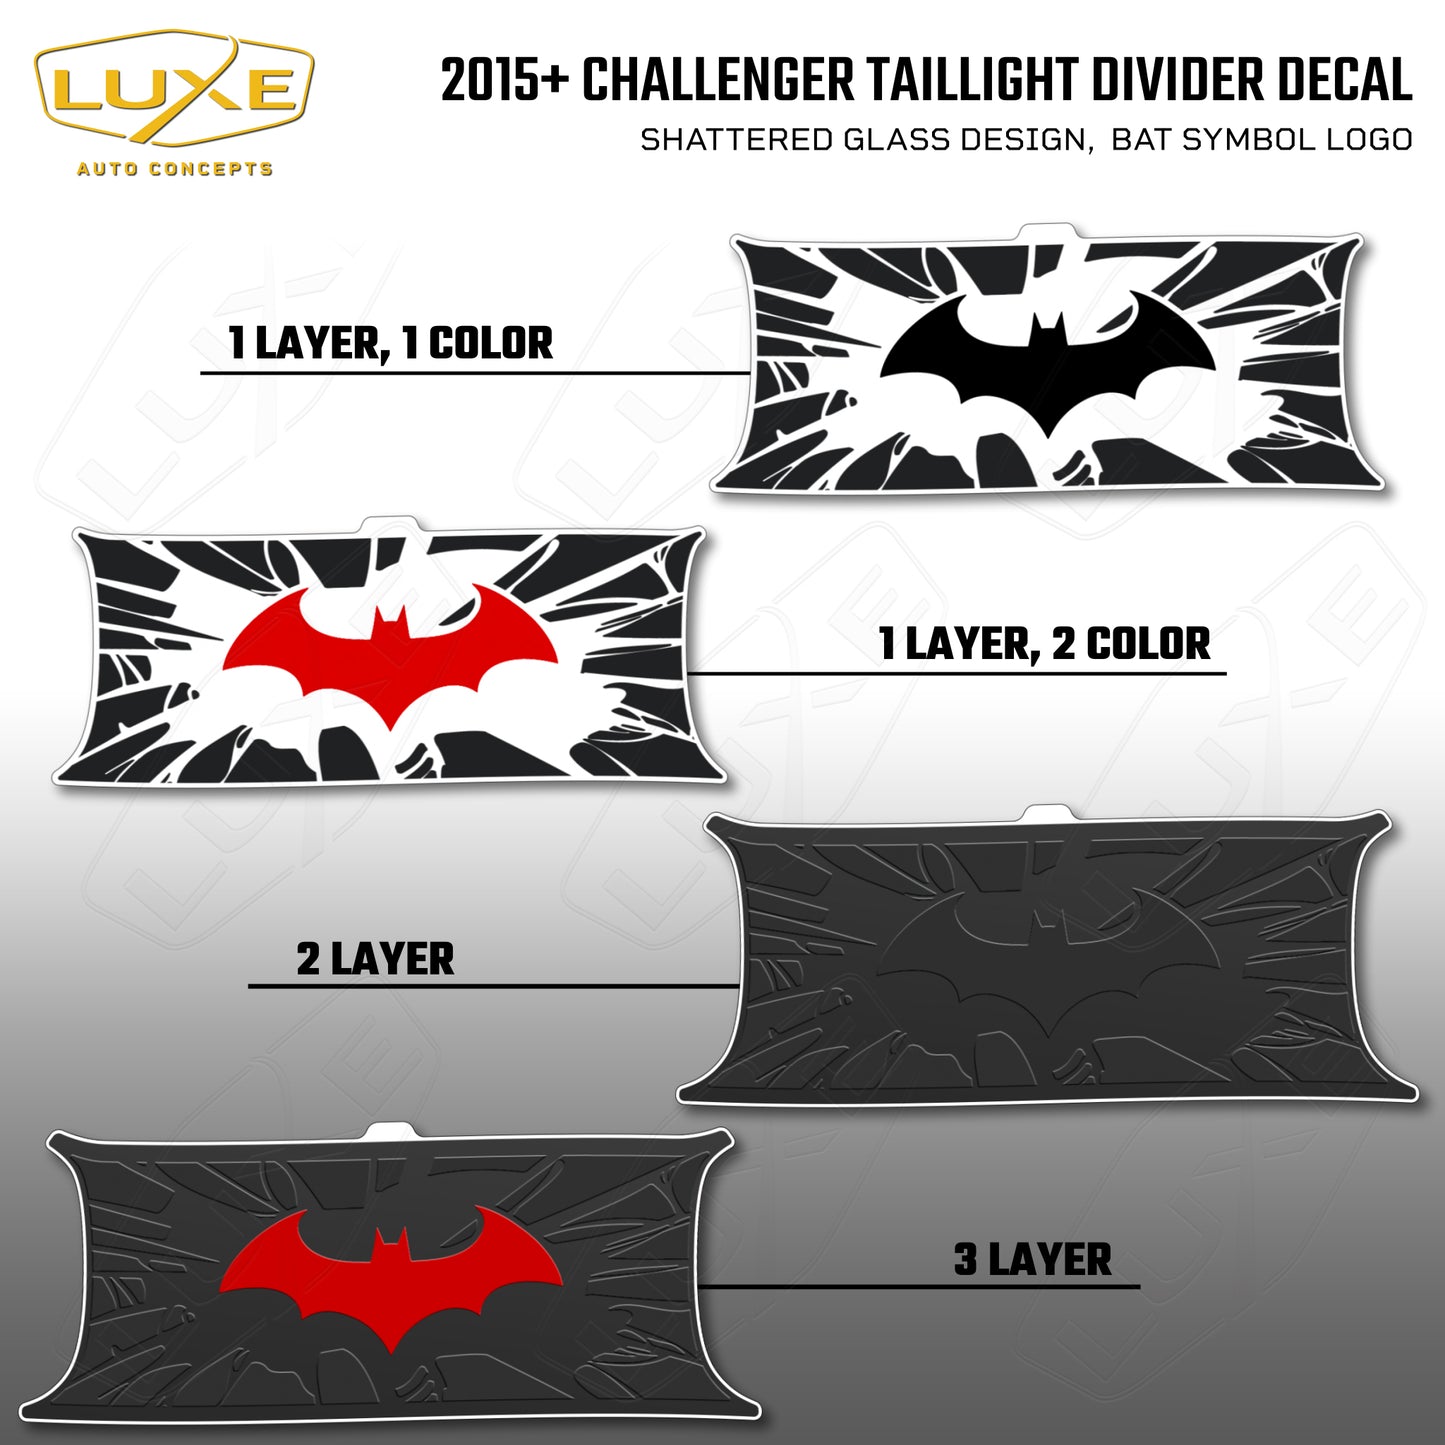 2015+ Challenger Taillight Center Divider Decal - Shattered Glass Design, Bat Symbol